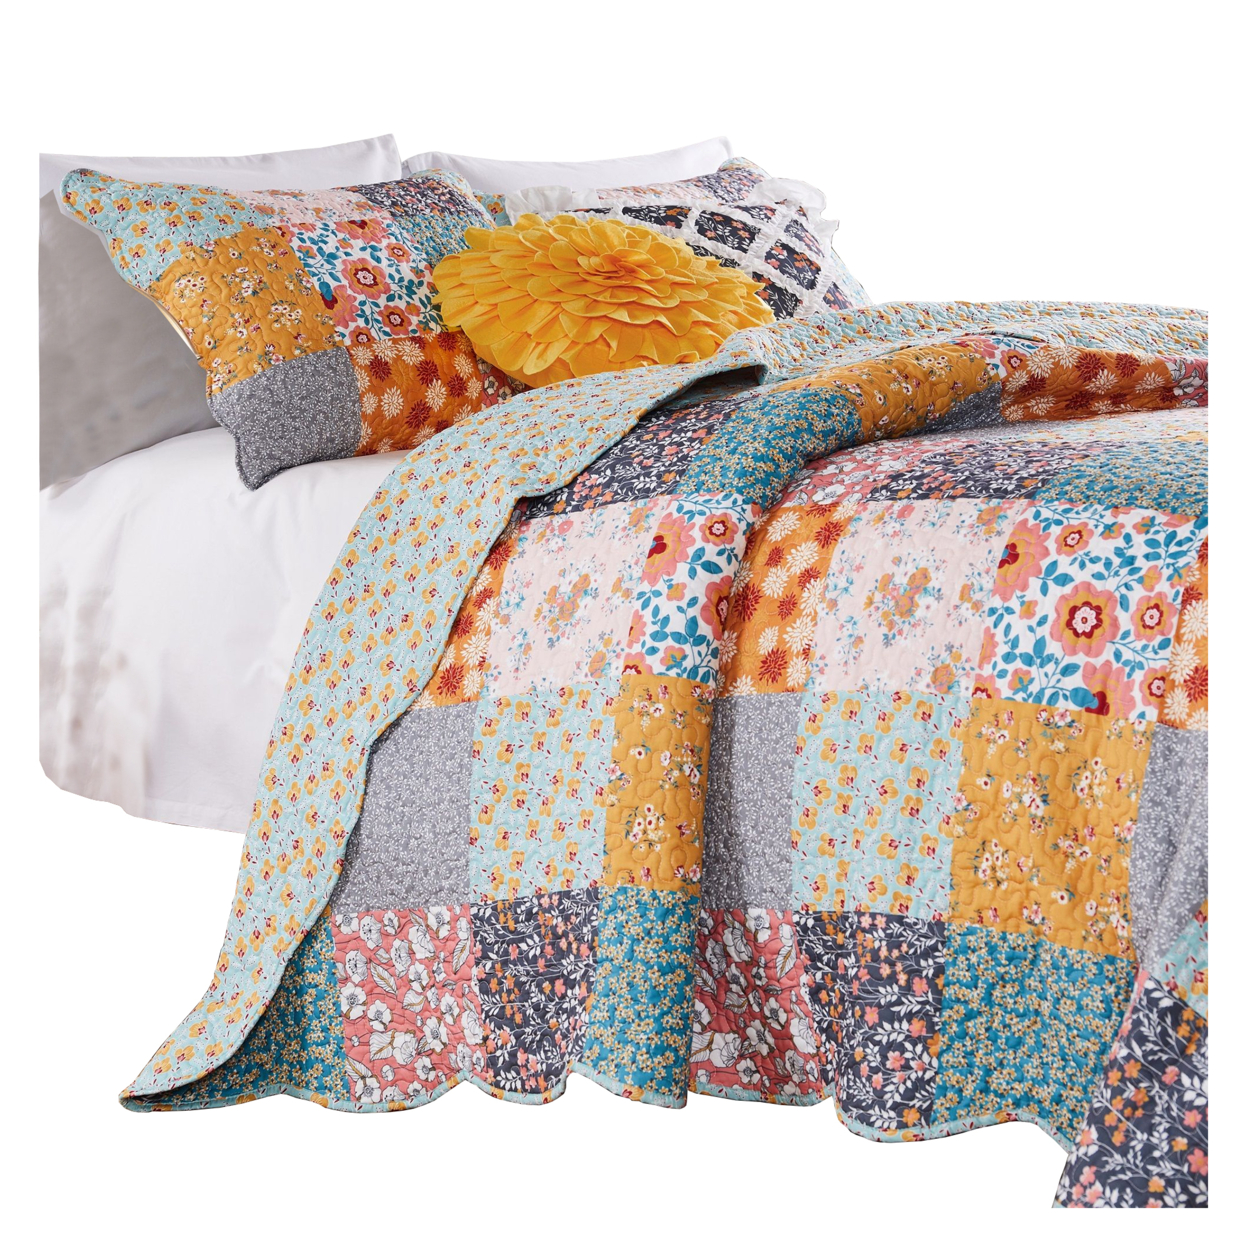 2 Piece Twin Quilt Set With Floral Print, Multicolor- Saltoro Sherpi